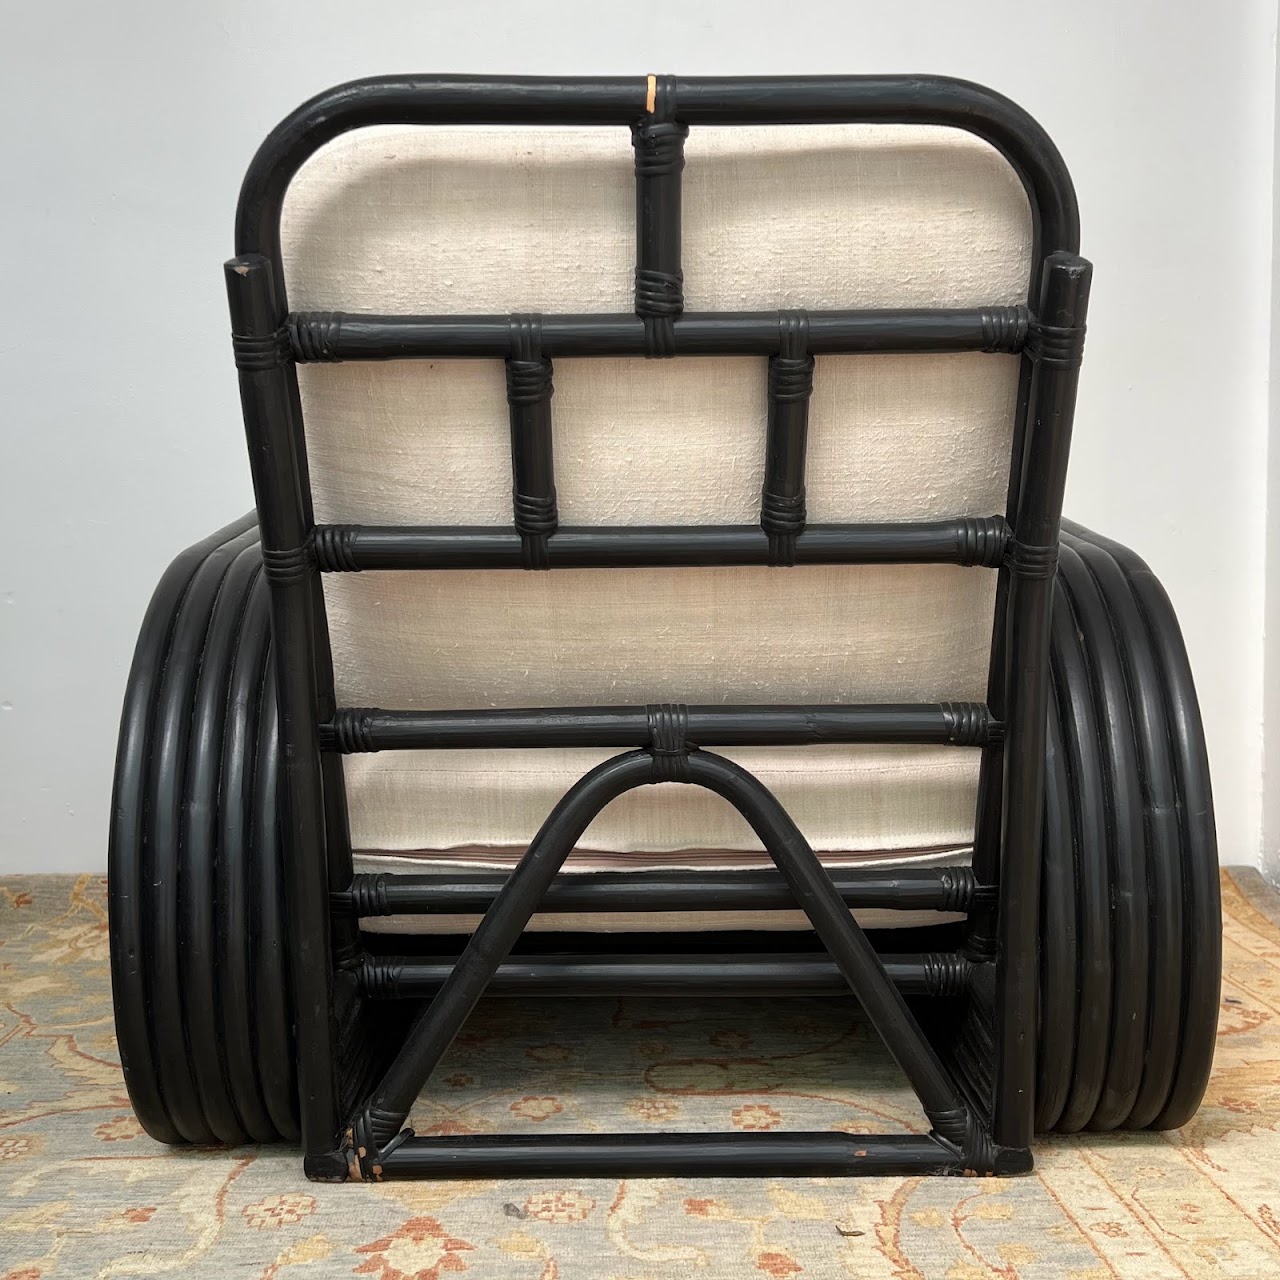 1950s Paul Frankl Style Five-Strand Rattan Pretzel Lounge Chair Pair